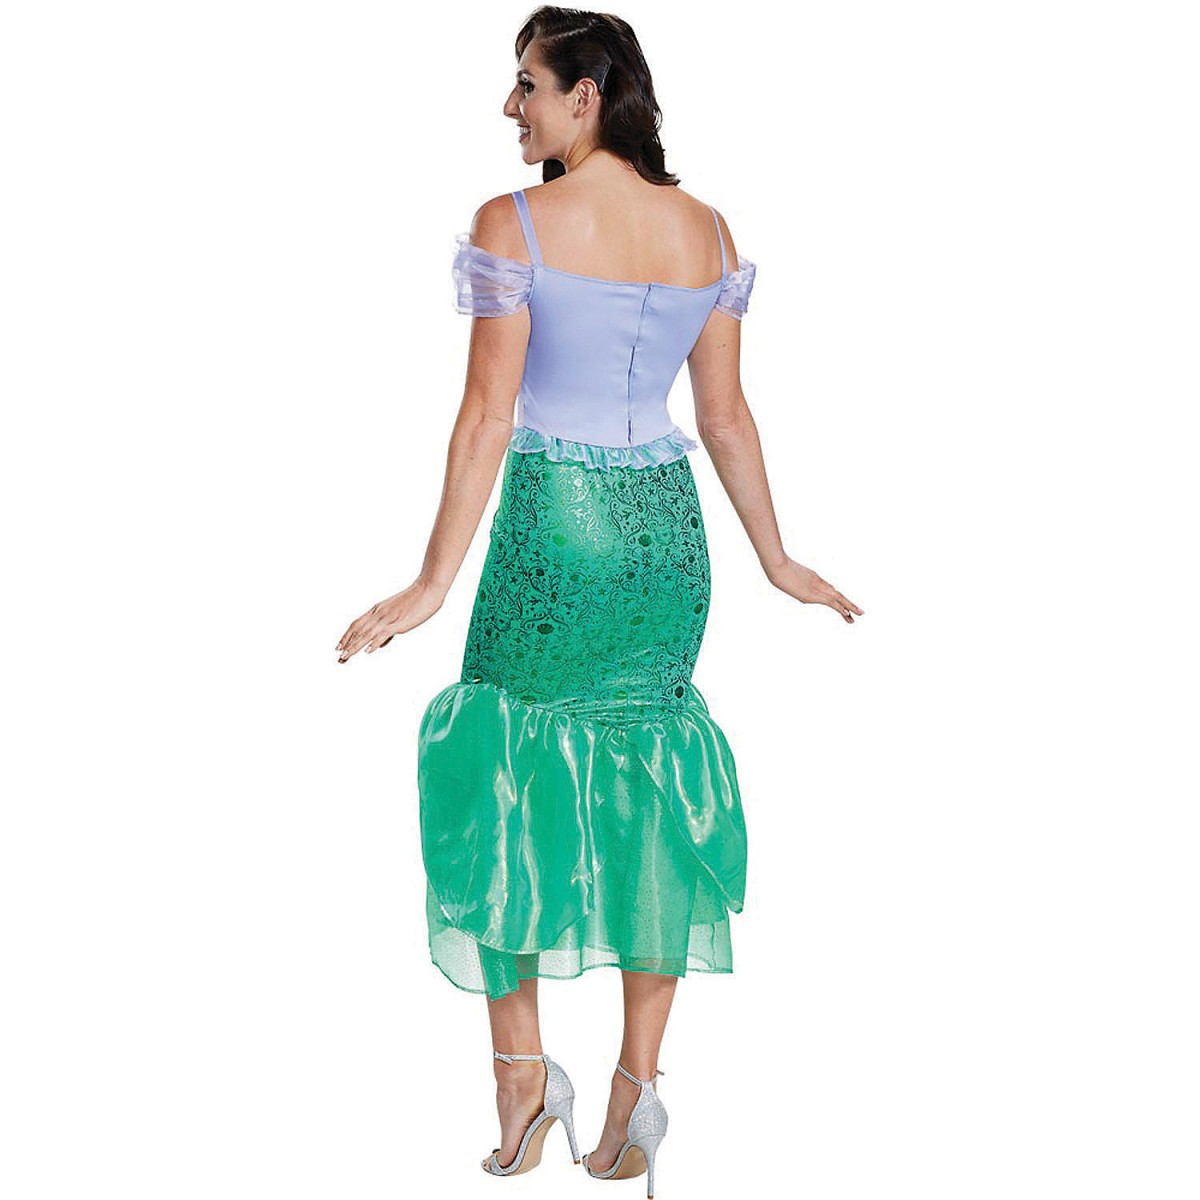 Disney's Little Mermaid Ariel Costume for Women Size Large